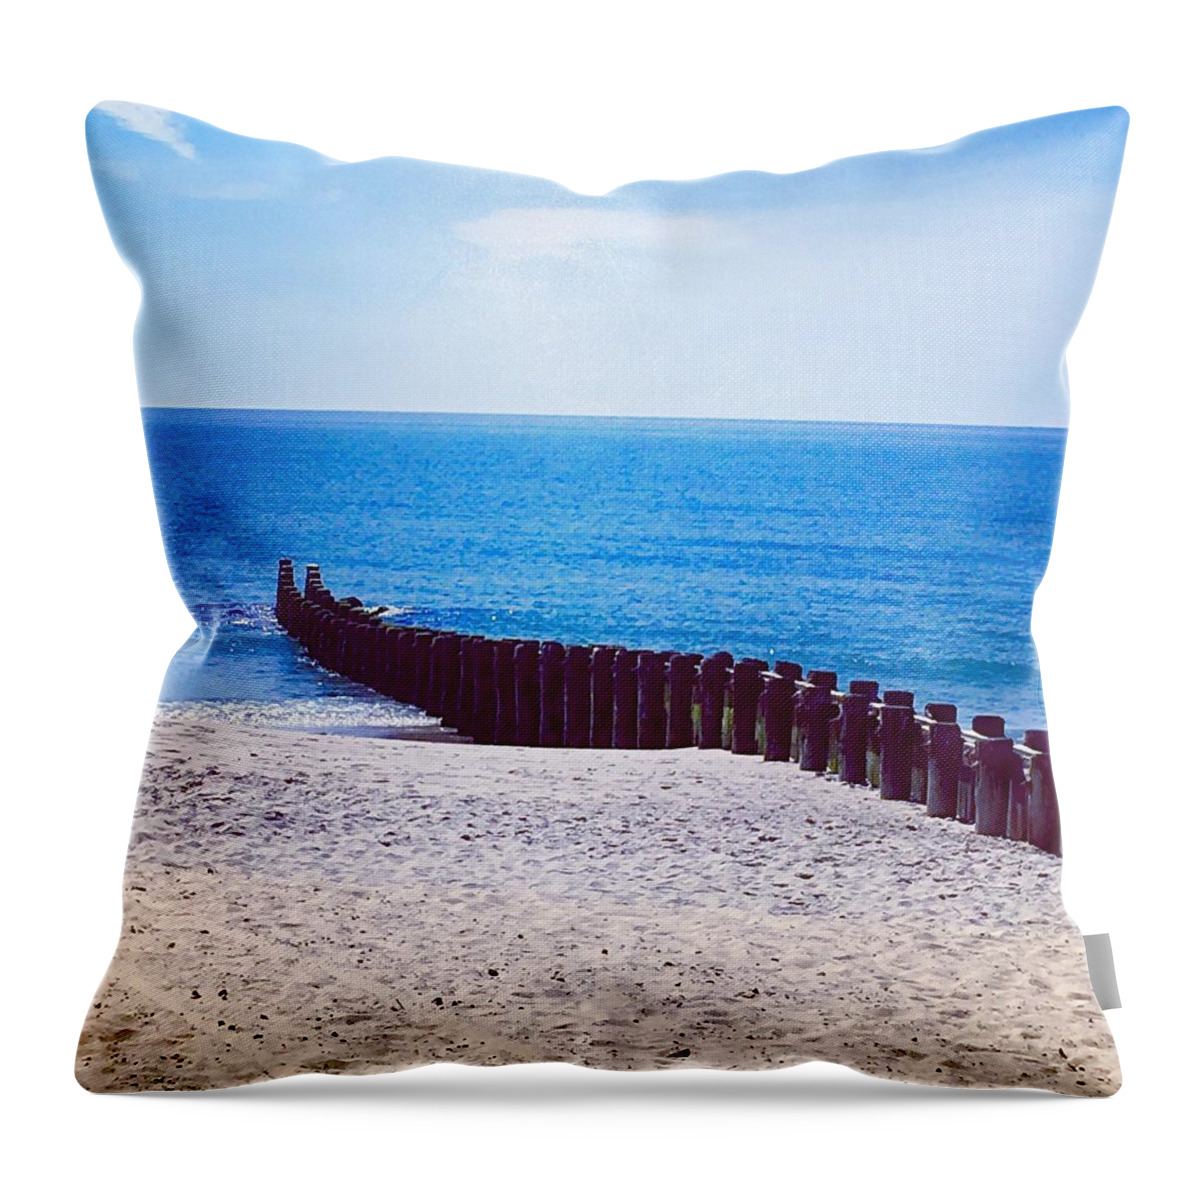 Lbi Prints Throw Pillow featuring the photograph Long Beach Island dreaming by Dottie Visker